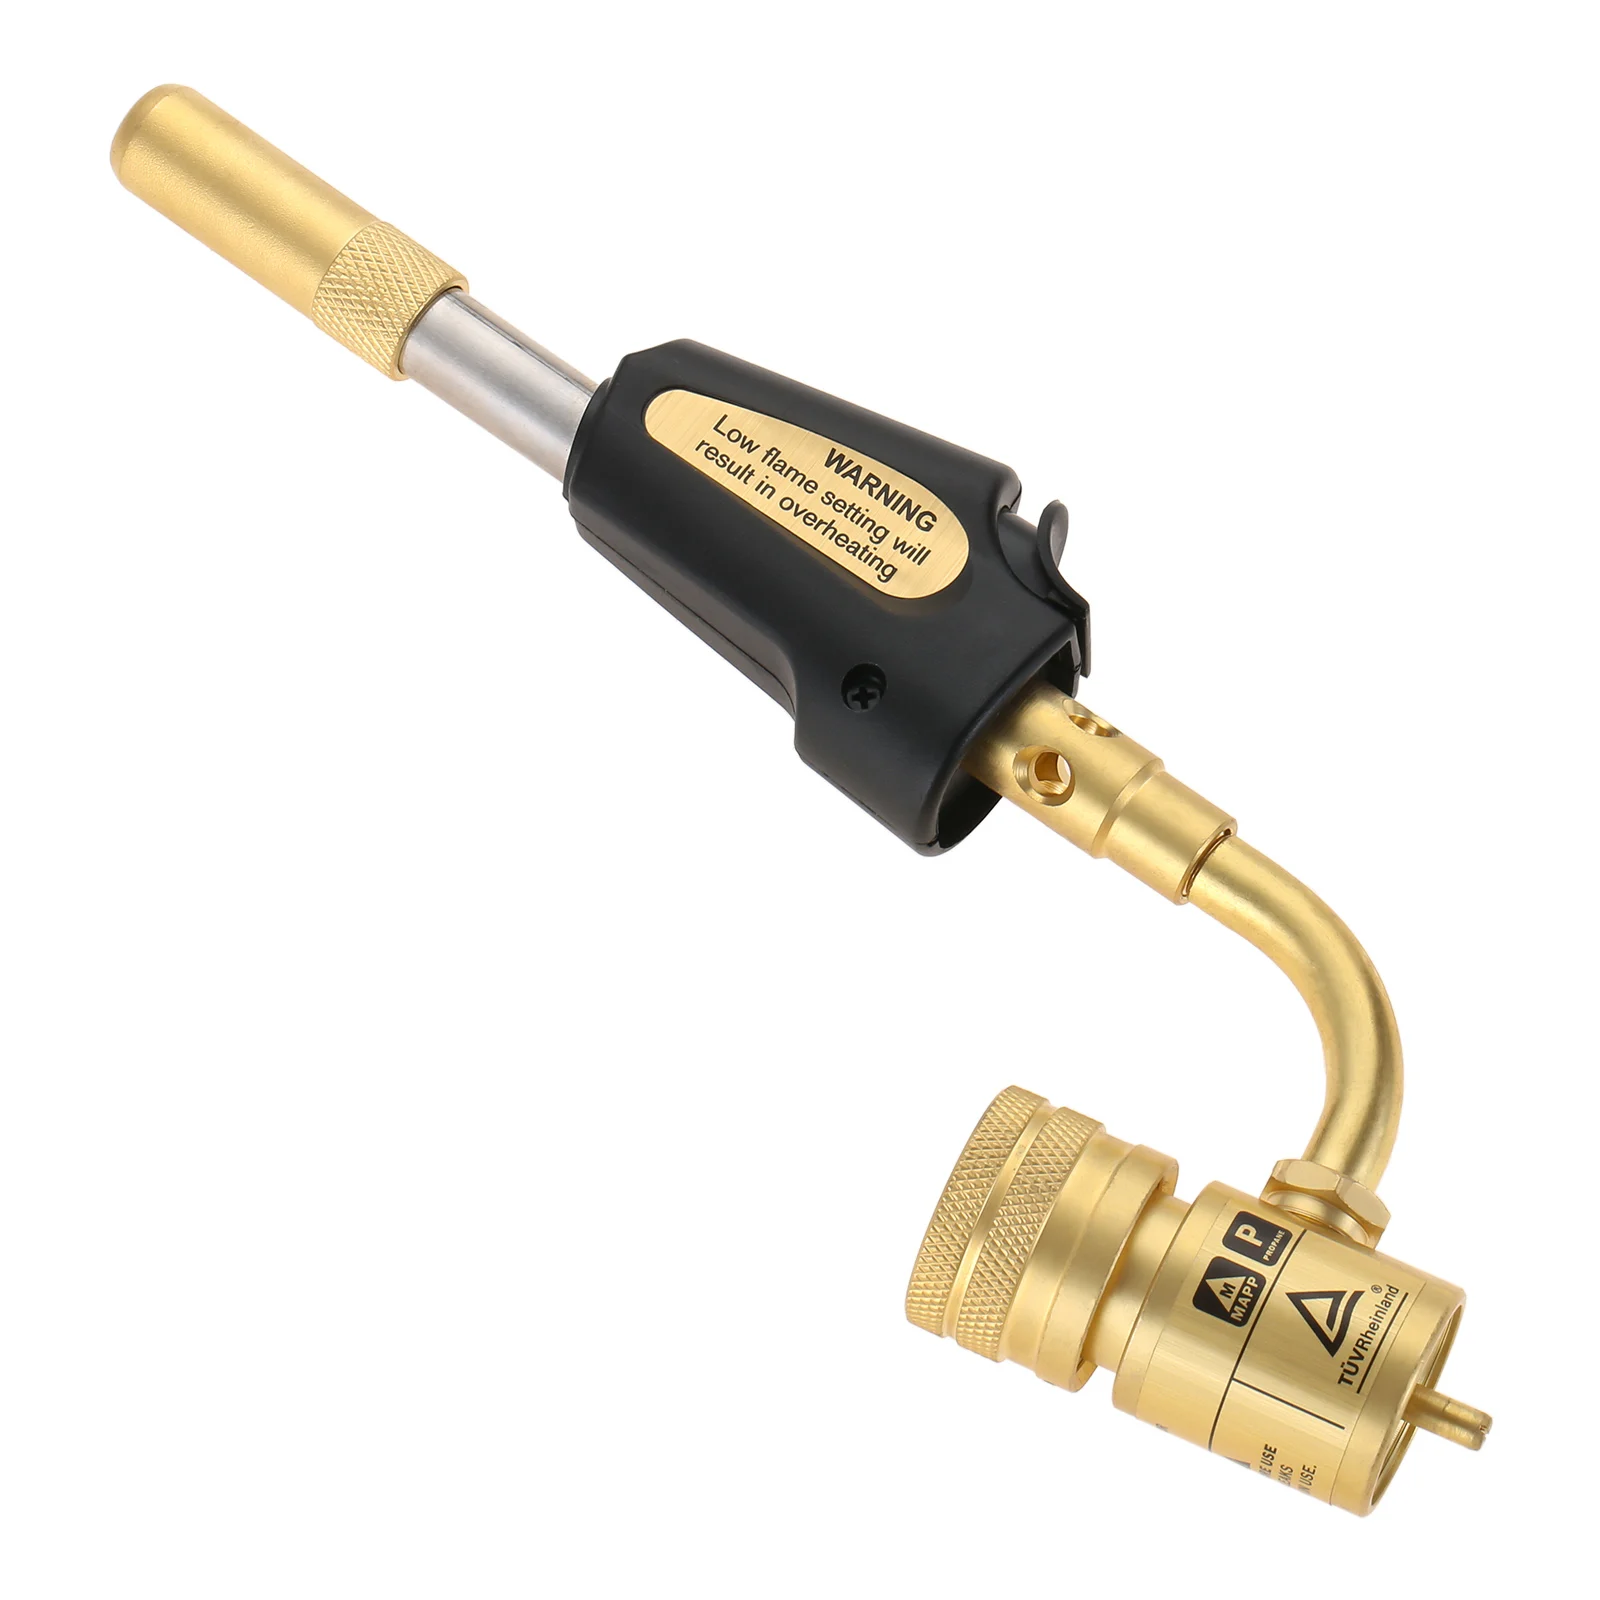 

1set Propane Mapp Gas Turbo Torch Head Brass Nozzle with Self Ignition Trigger Adjustable Regulator Weld HVAC Brazing BBQ Plumb